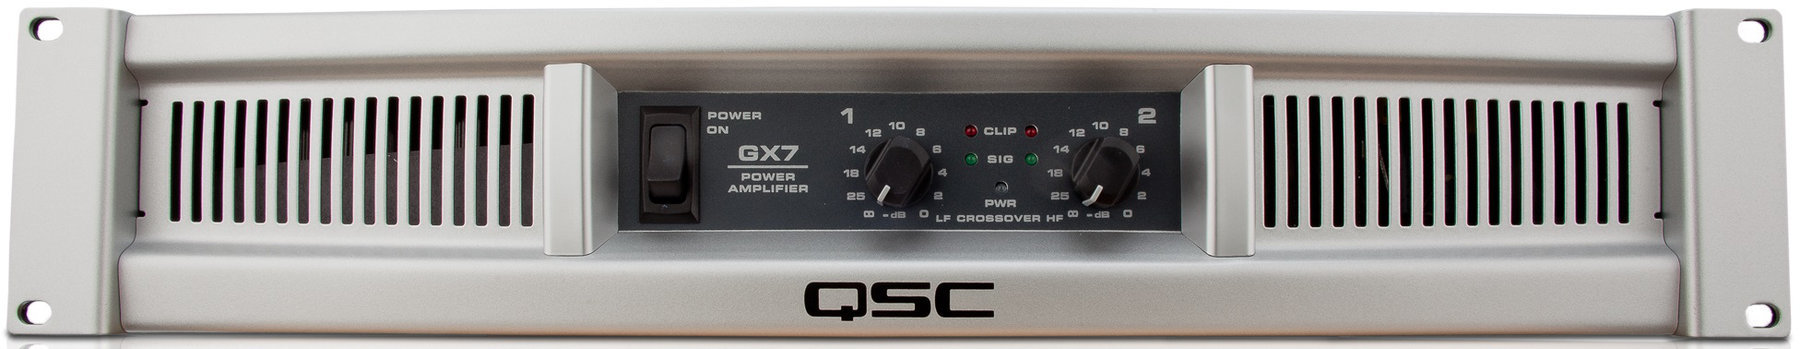 Power amplifier QSC GX7 Power amplifier